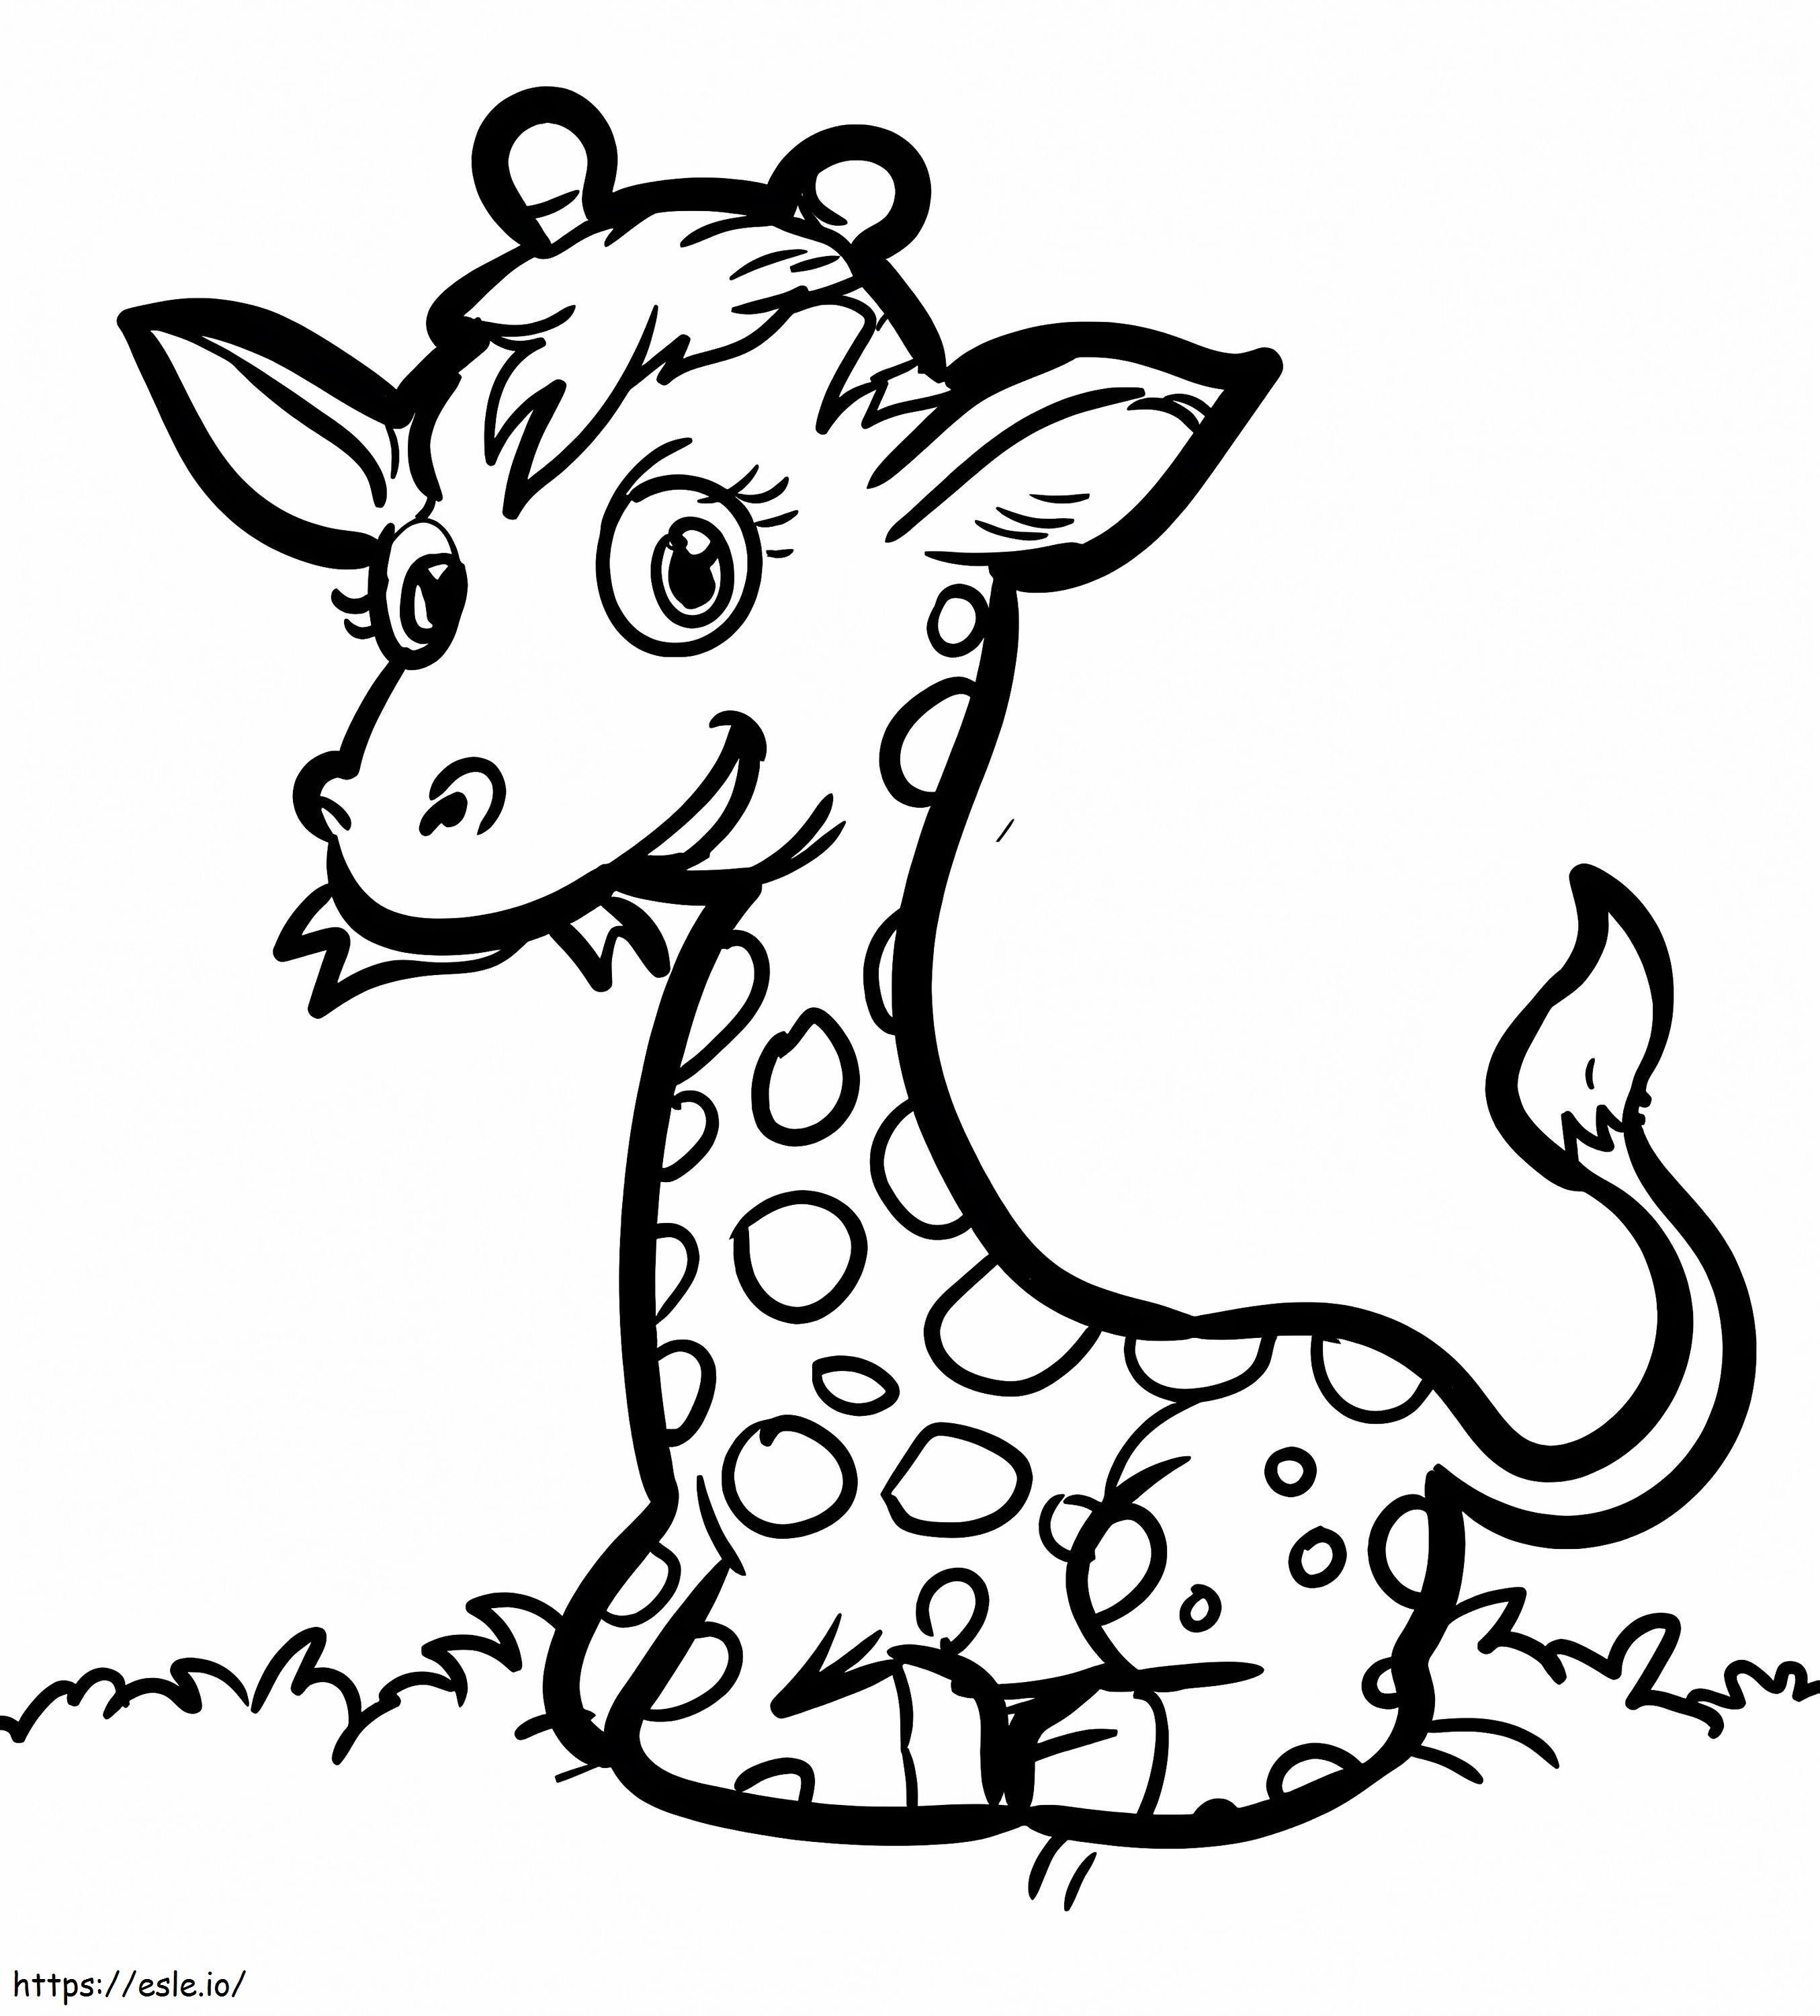 Coloriage Adorable girafe à imprimer dessin